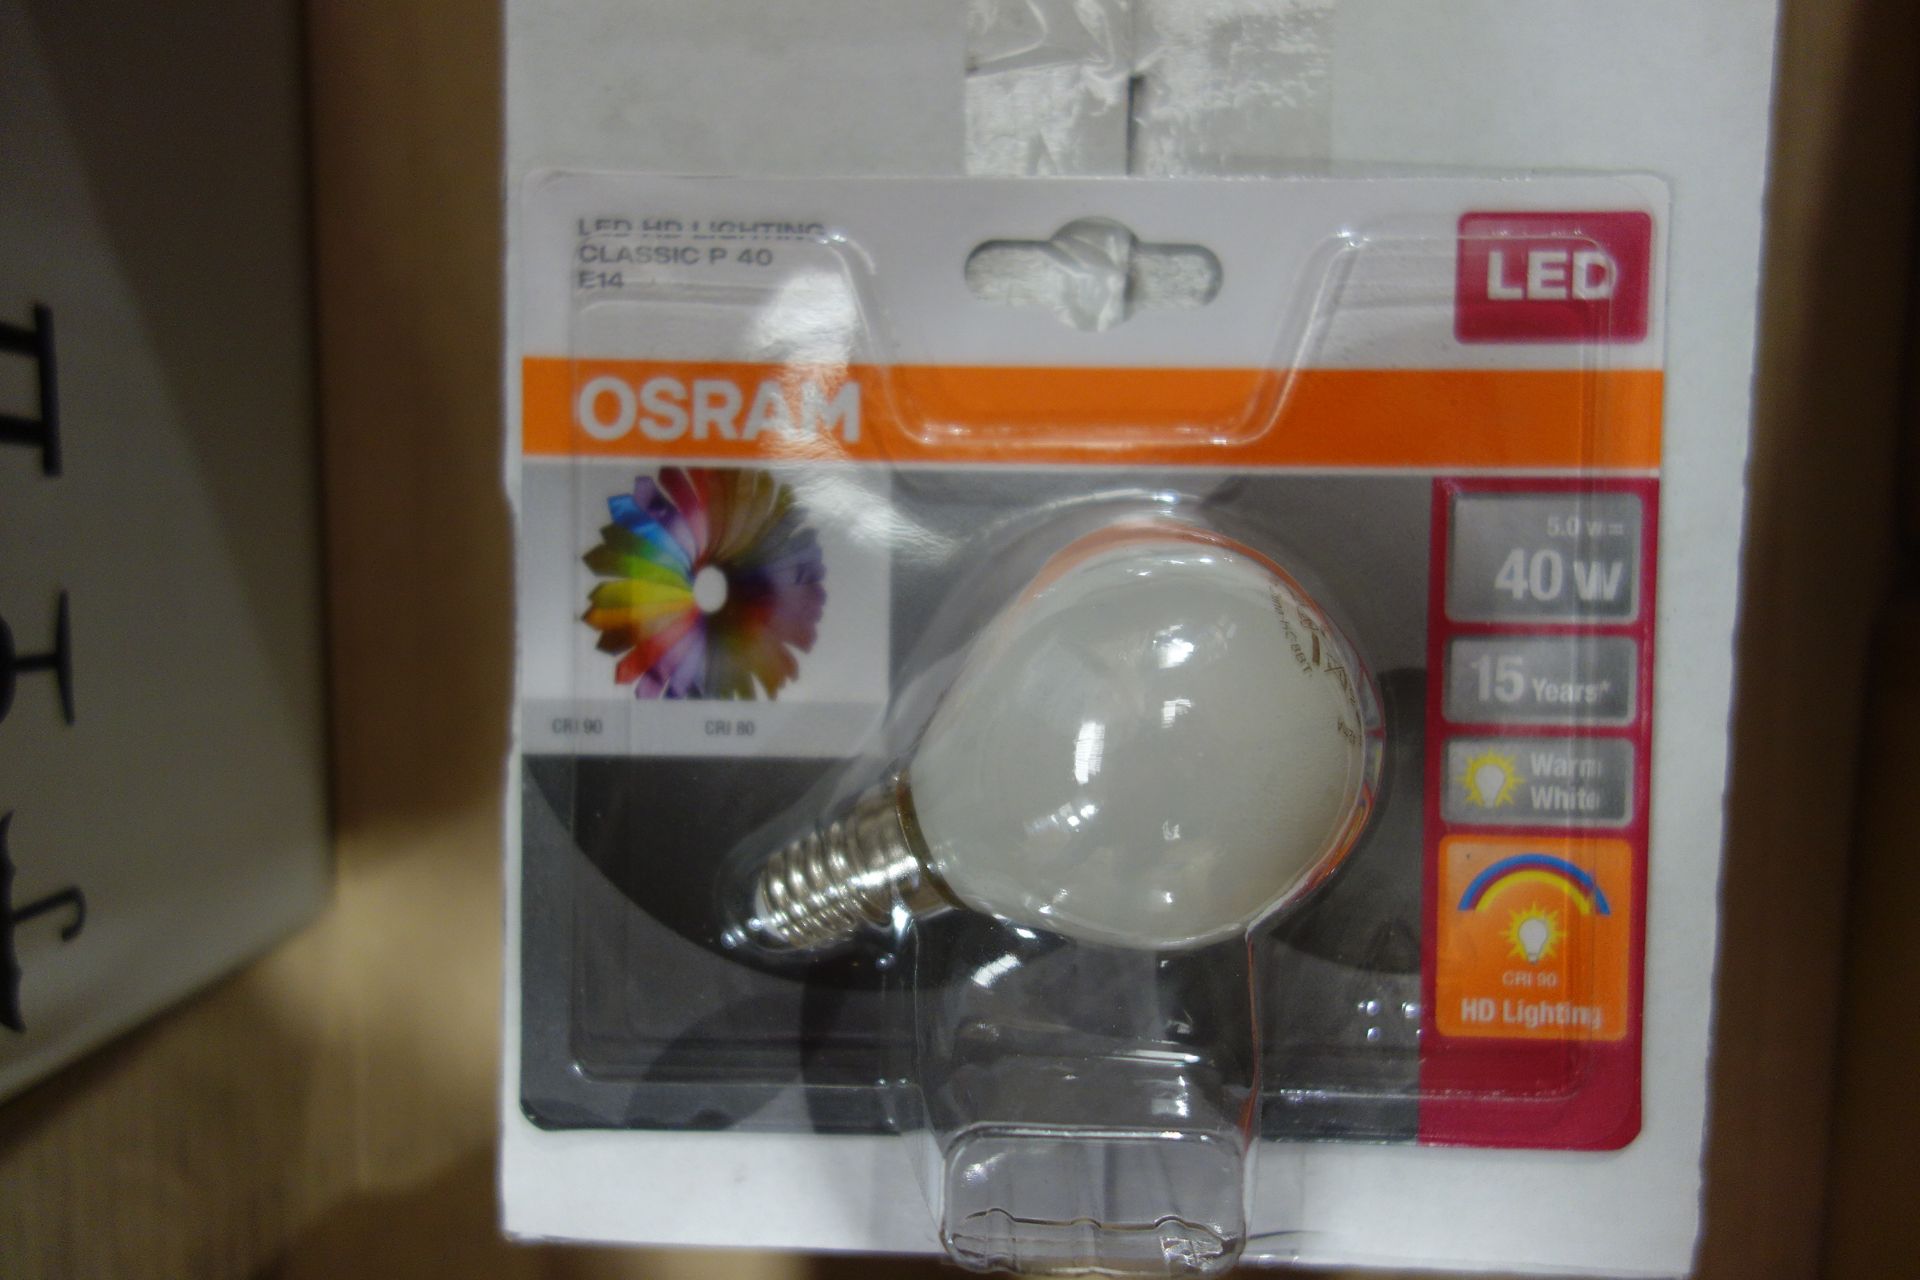 84 X Osram 813694 5W LED Lamps E14 Fitting Classic P40